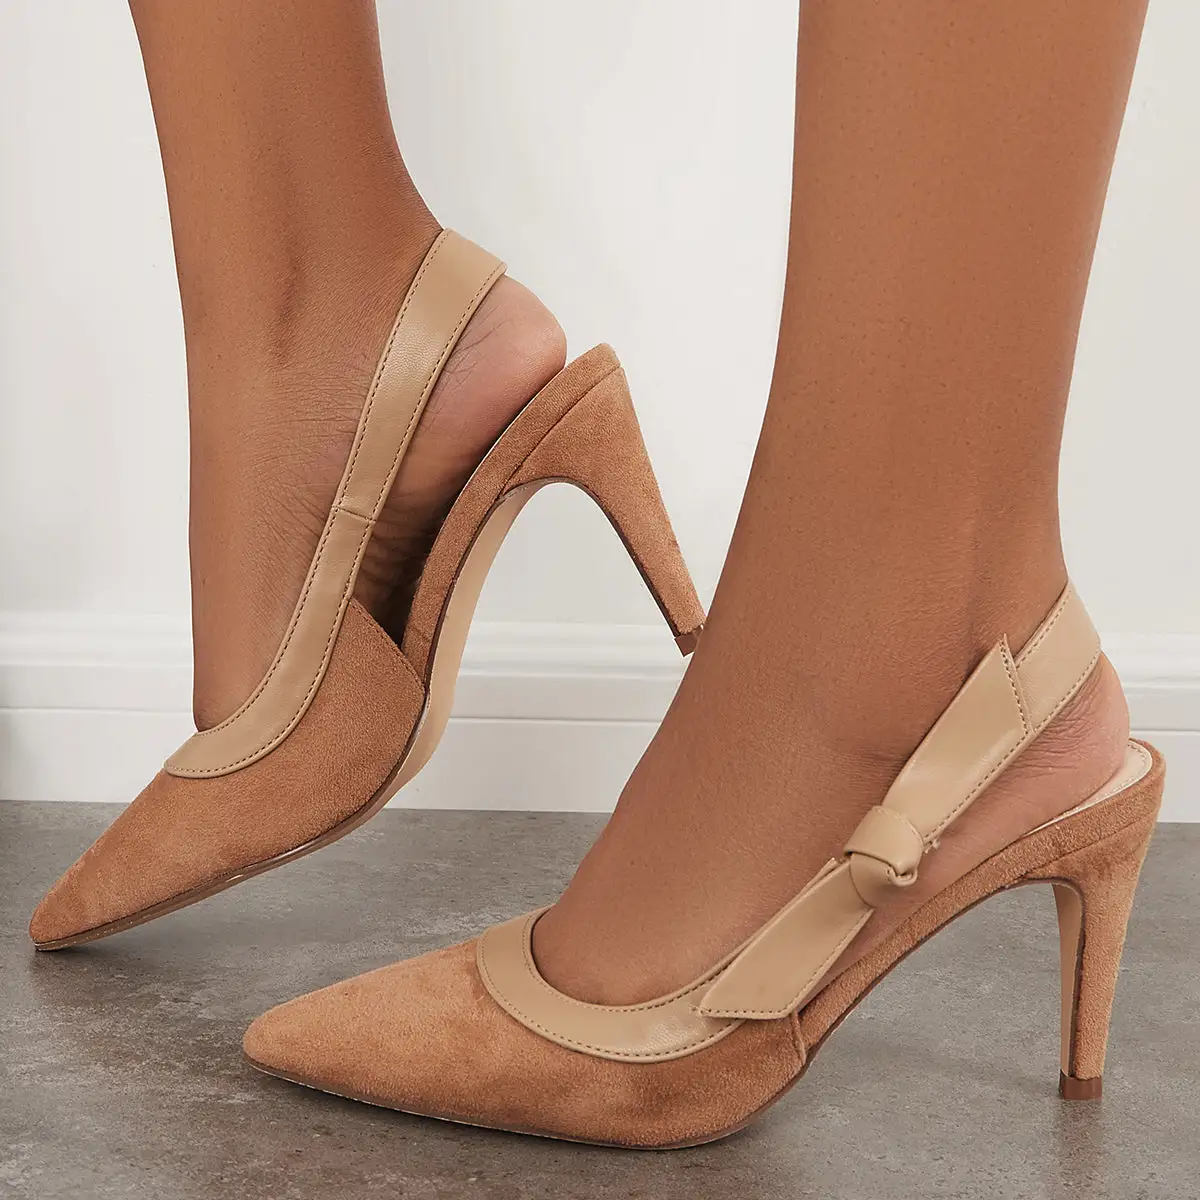 Side Bowtie Slingback Pumps Pointed Toe High Heel Dress Shoes